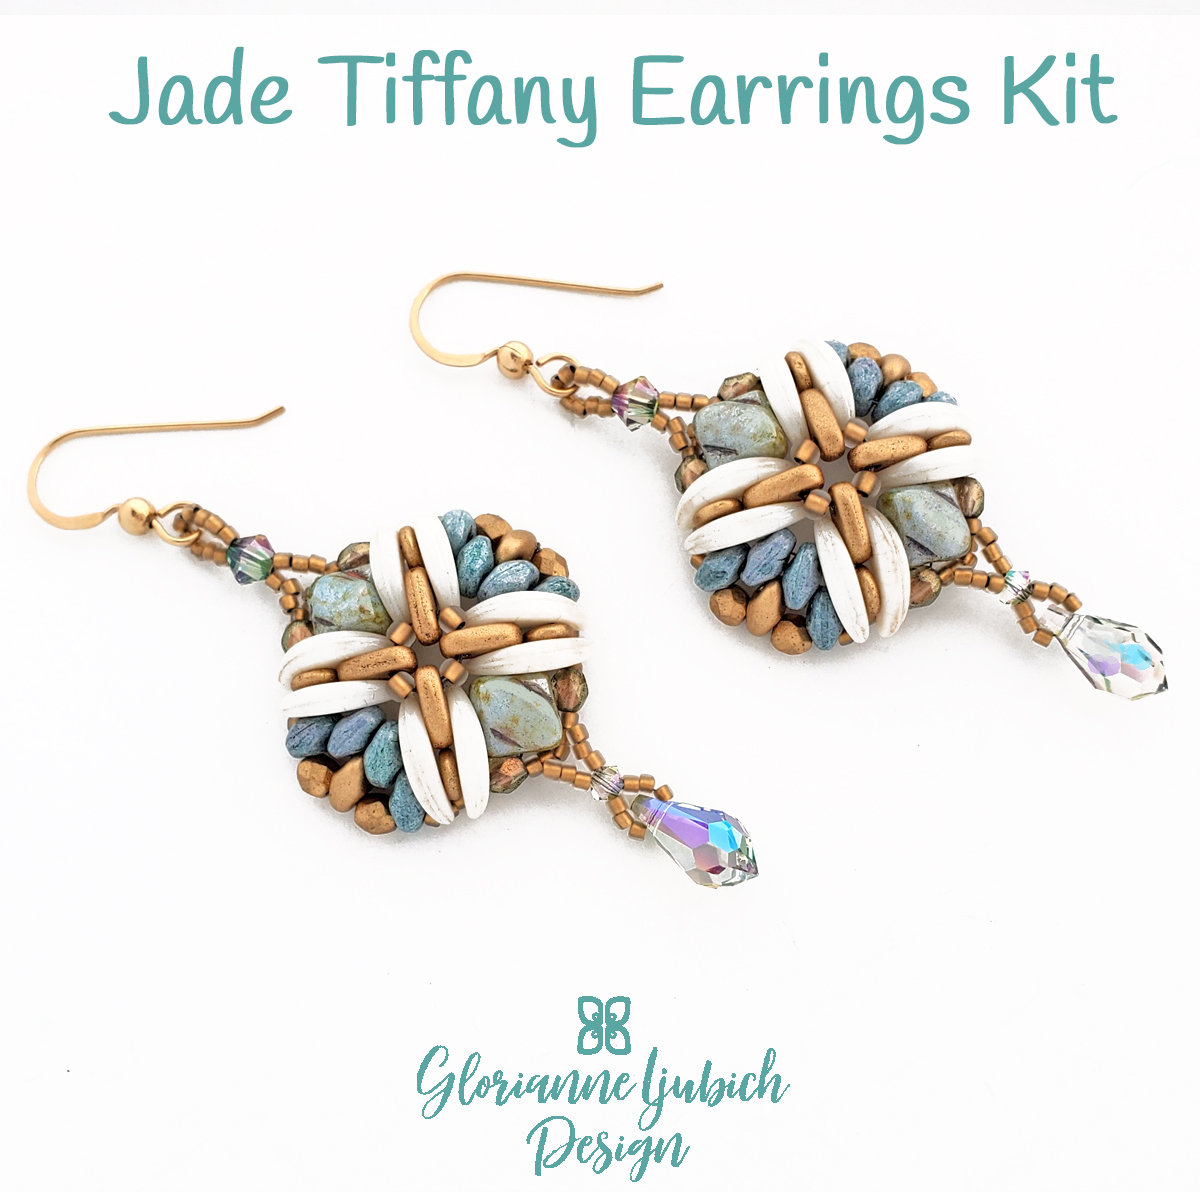 Jade Daphne Beadweaving Earrings Kit